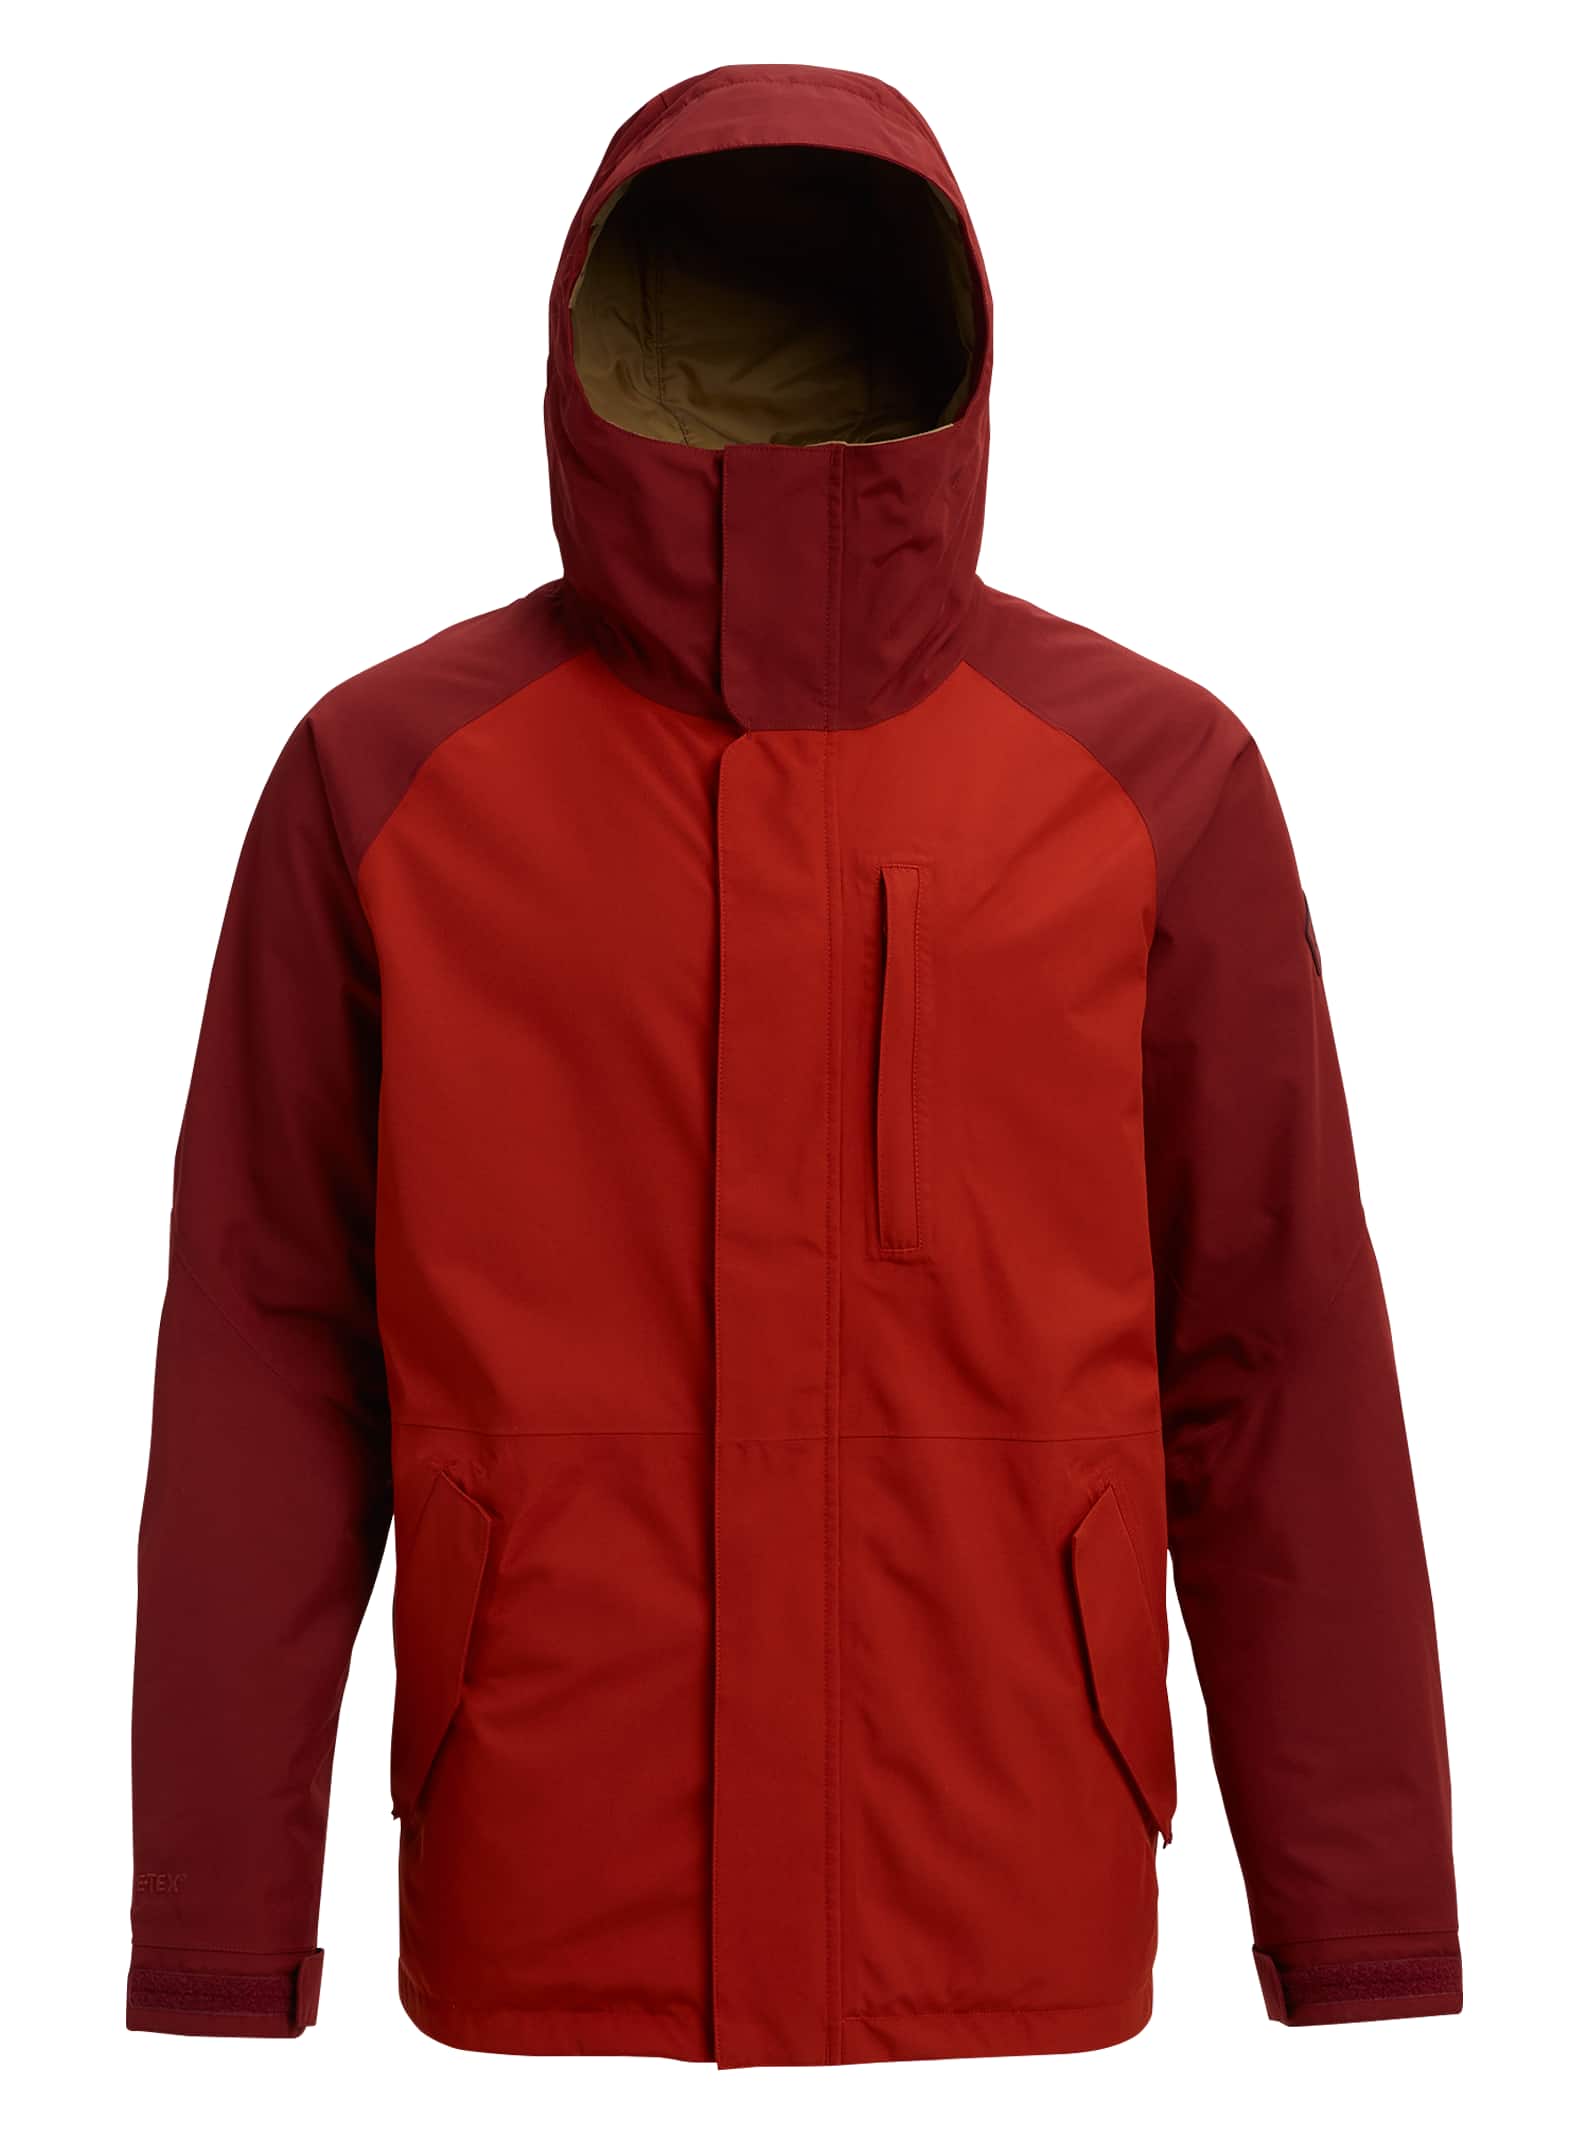 Men's Burton GORE-TEX Radial Insulated Jacket | Burton.com Winter 2019 US